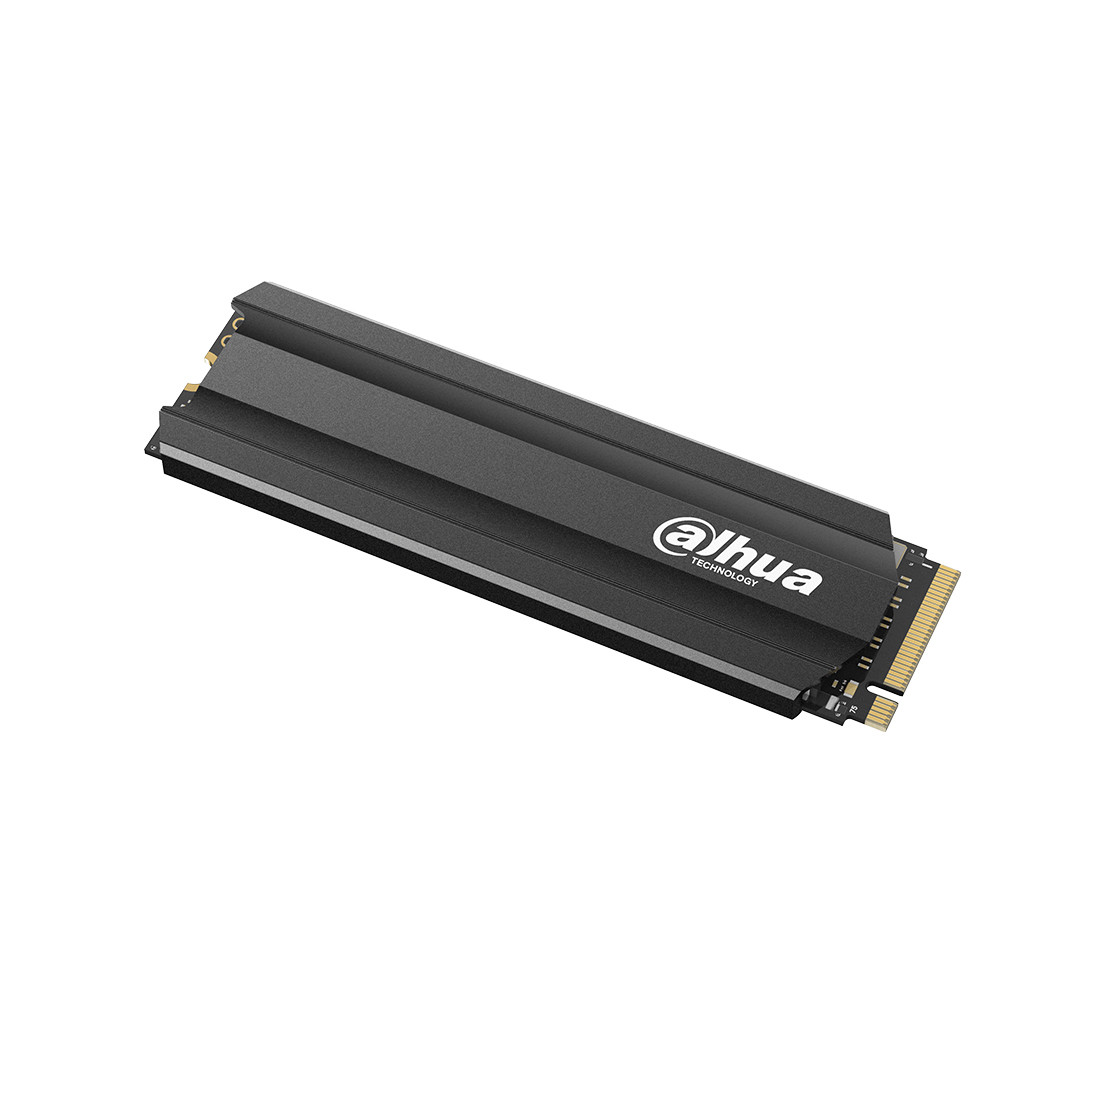 Твердотельный накопитель SSD  Dahua  E900 DHI-SSD-E900N256G  256 GB  M.2